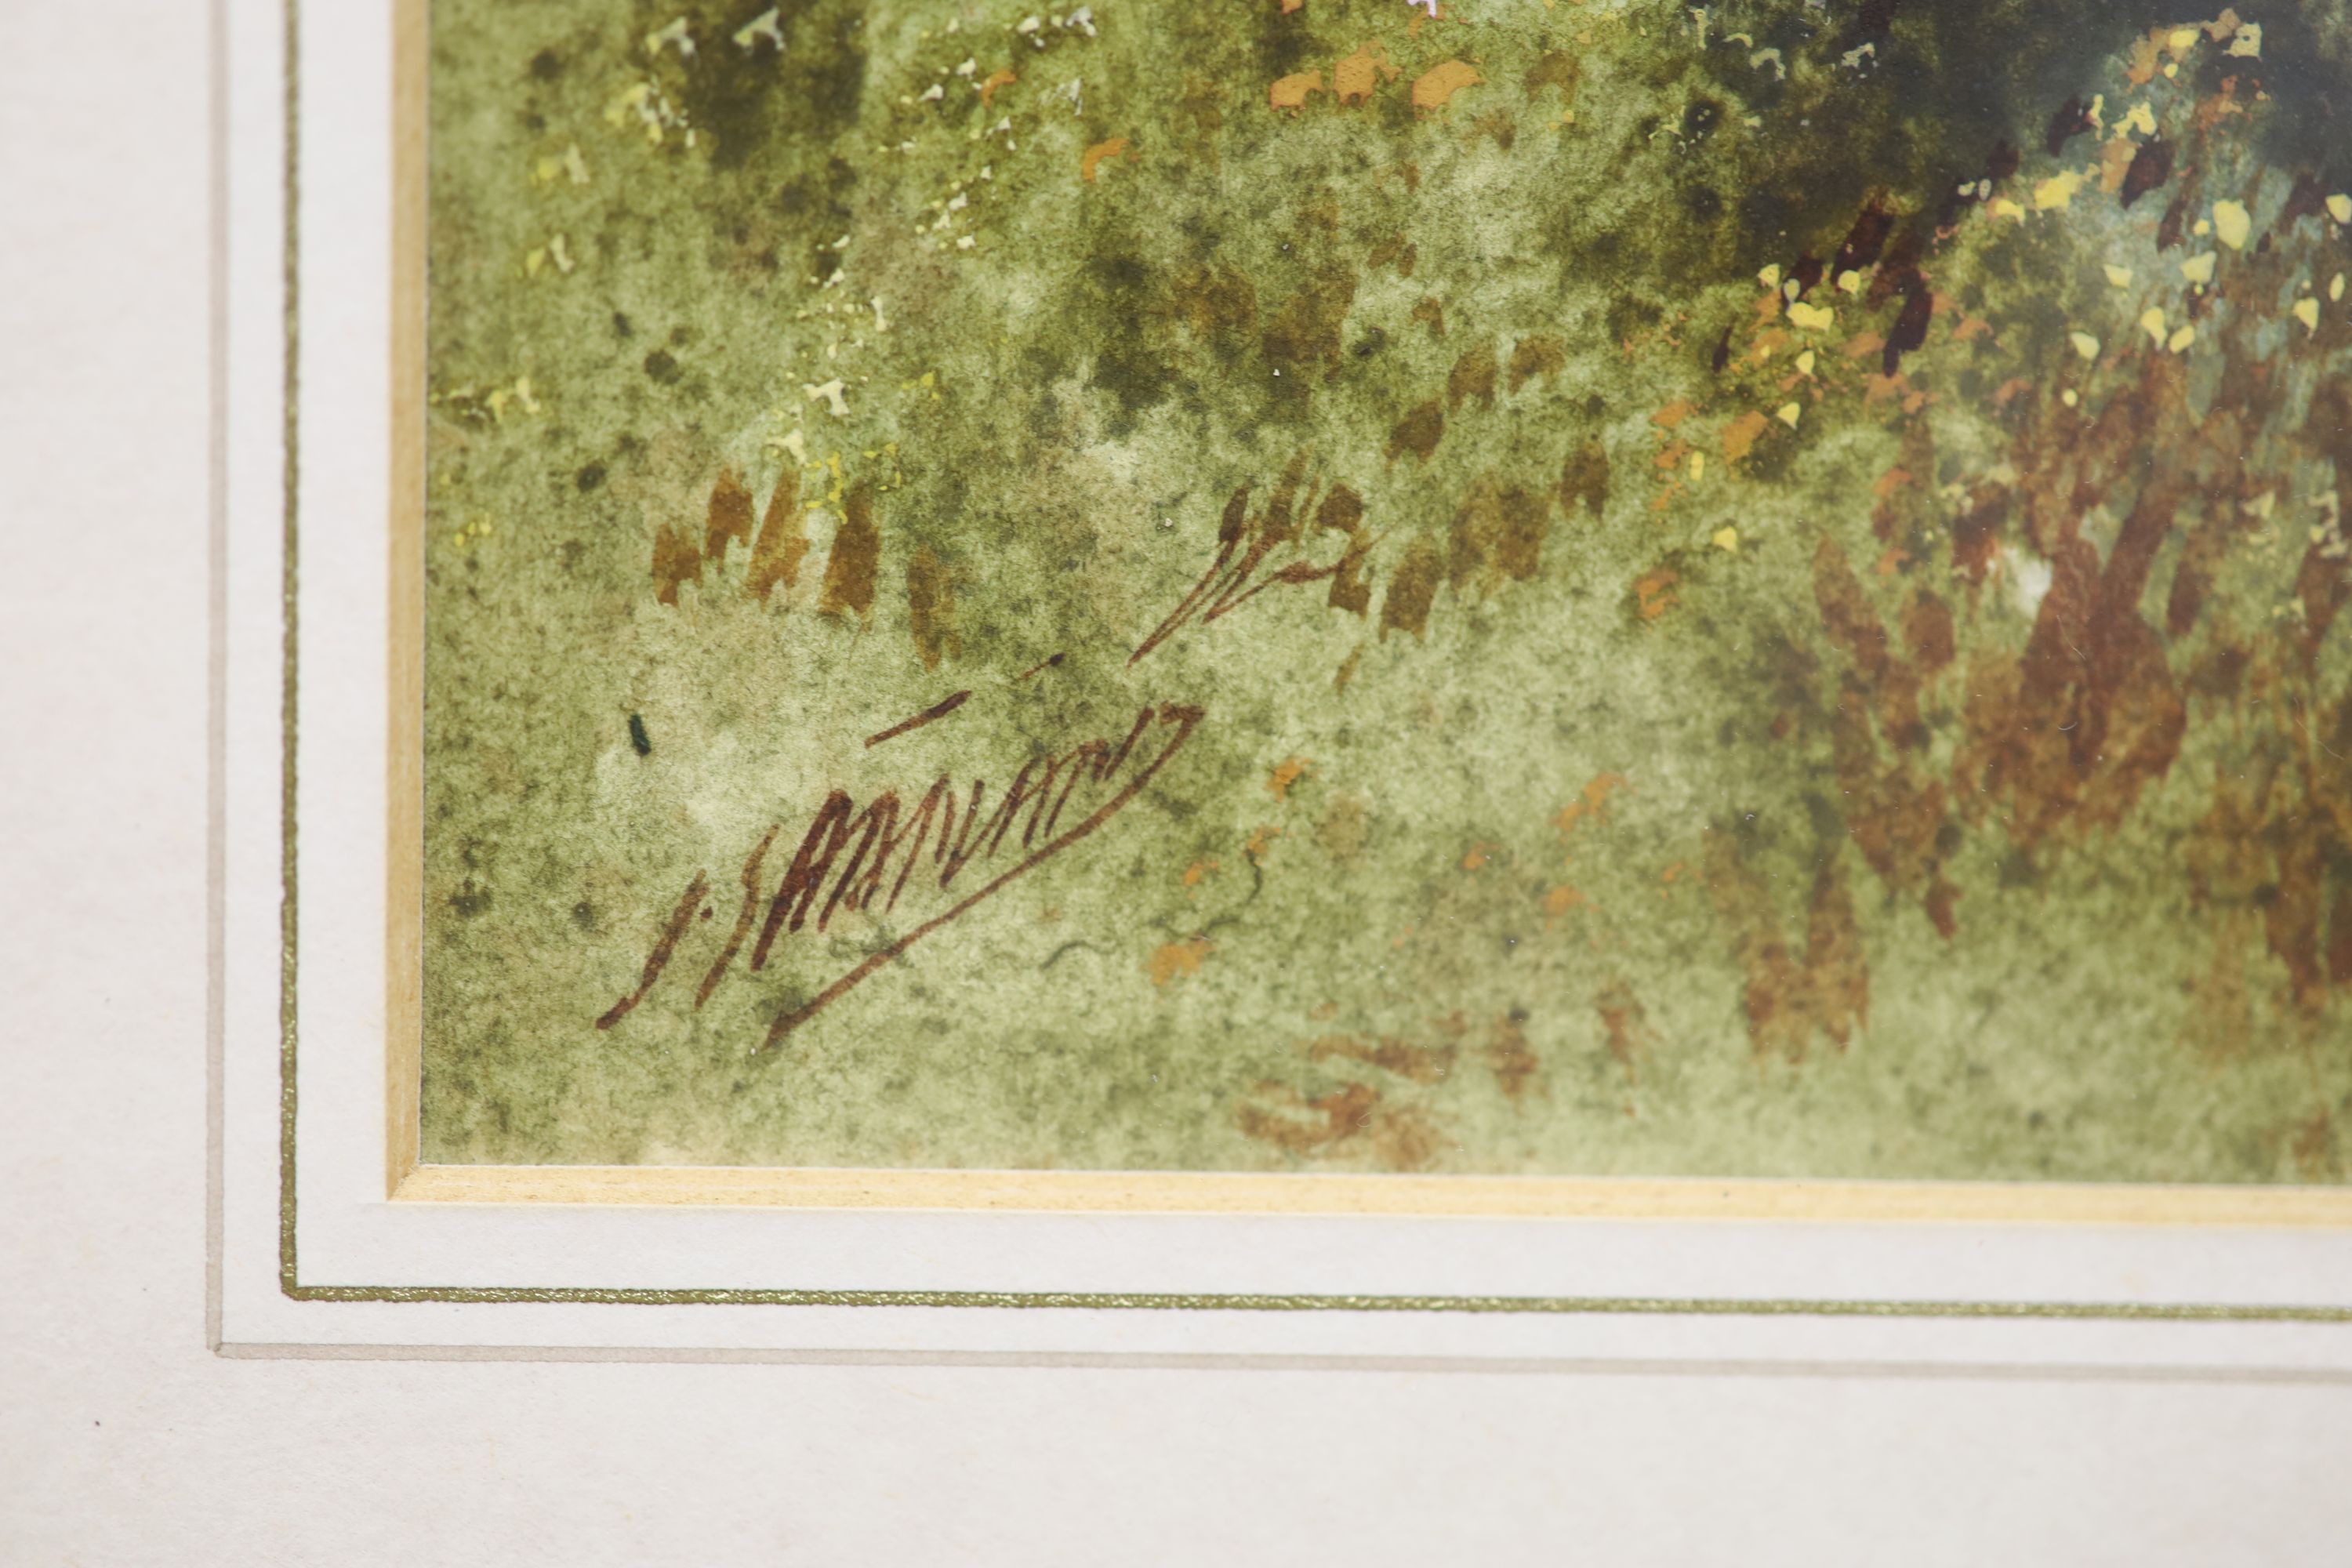 John Shapland, watercolour and gouache, Sea Cliffs, signed, 28 x 19cm